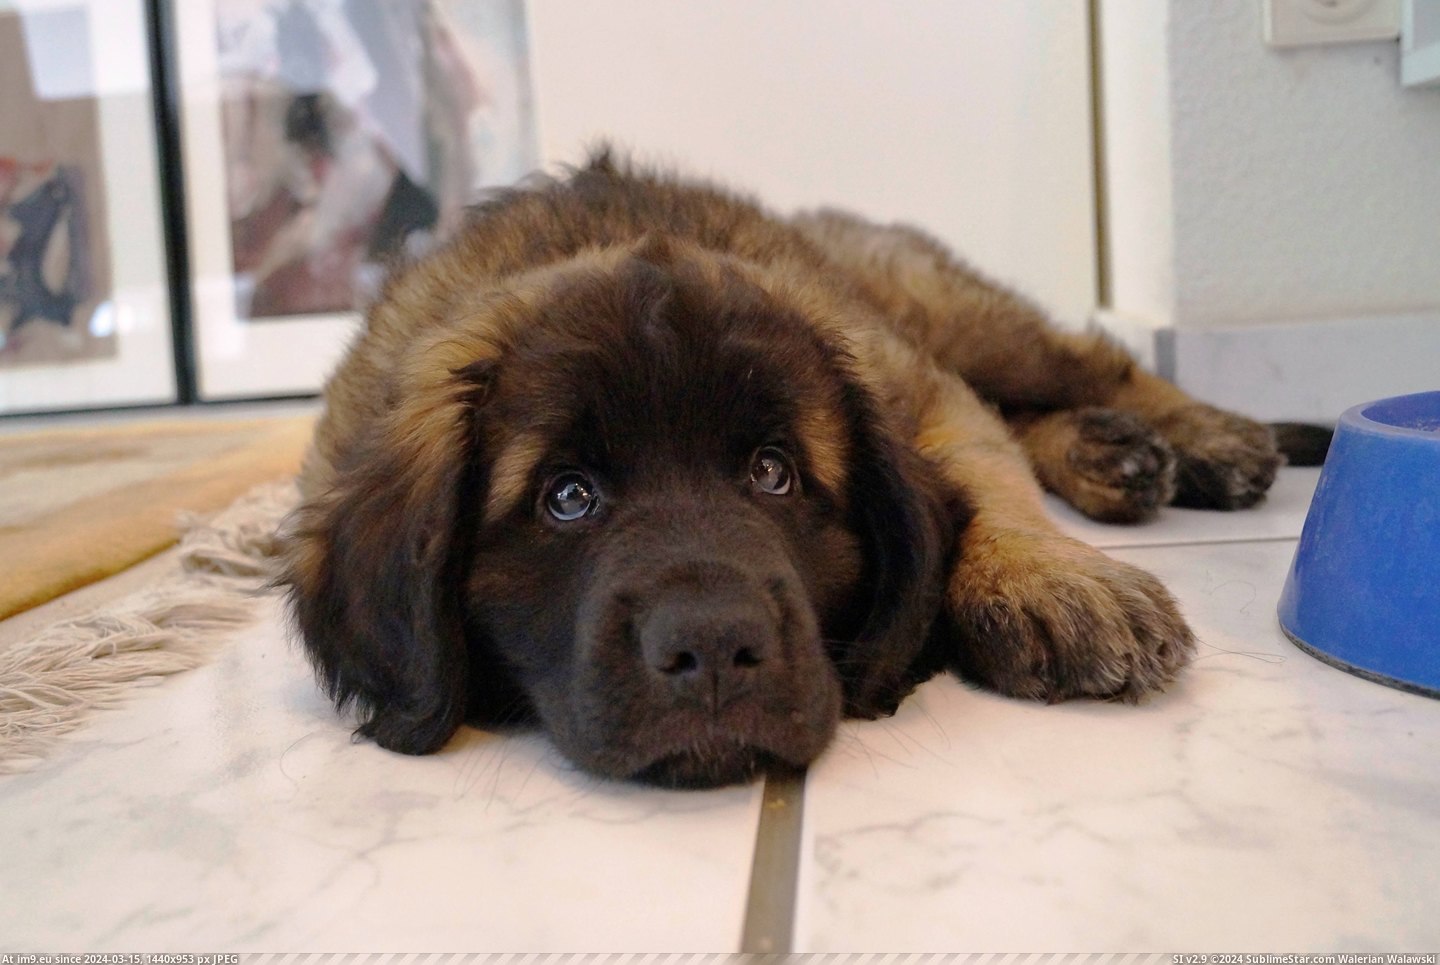 #Puppy #Weeks #Pounds #Cub #Leonberger #Father #Bear [Aww] Father just got a Leonberger puppy. 9 weeks, 19 pounds already. Like a little bear cub. Pic. (Bild von album My r/AWW favs))